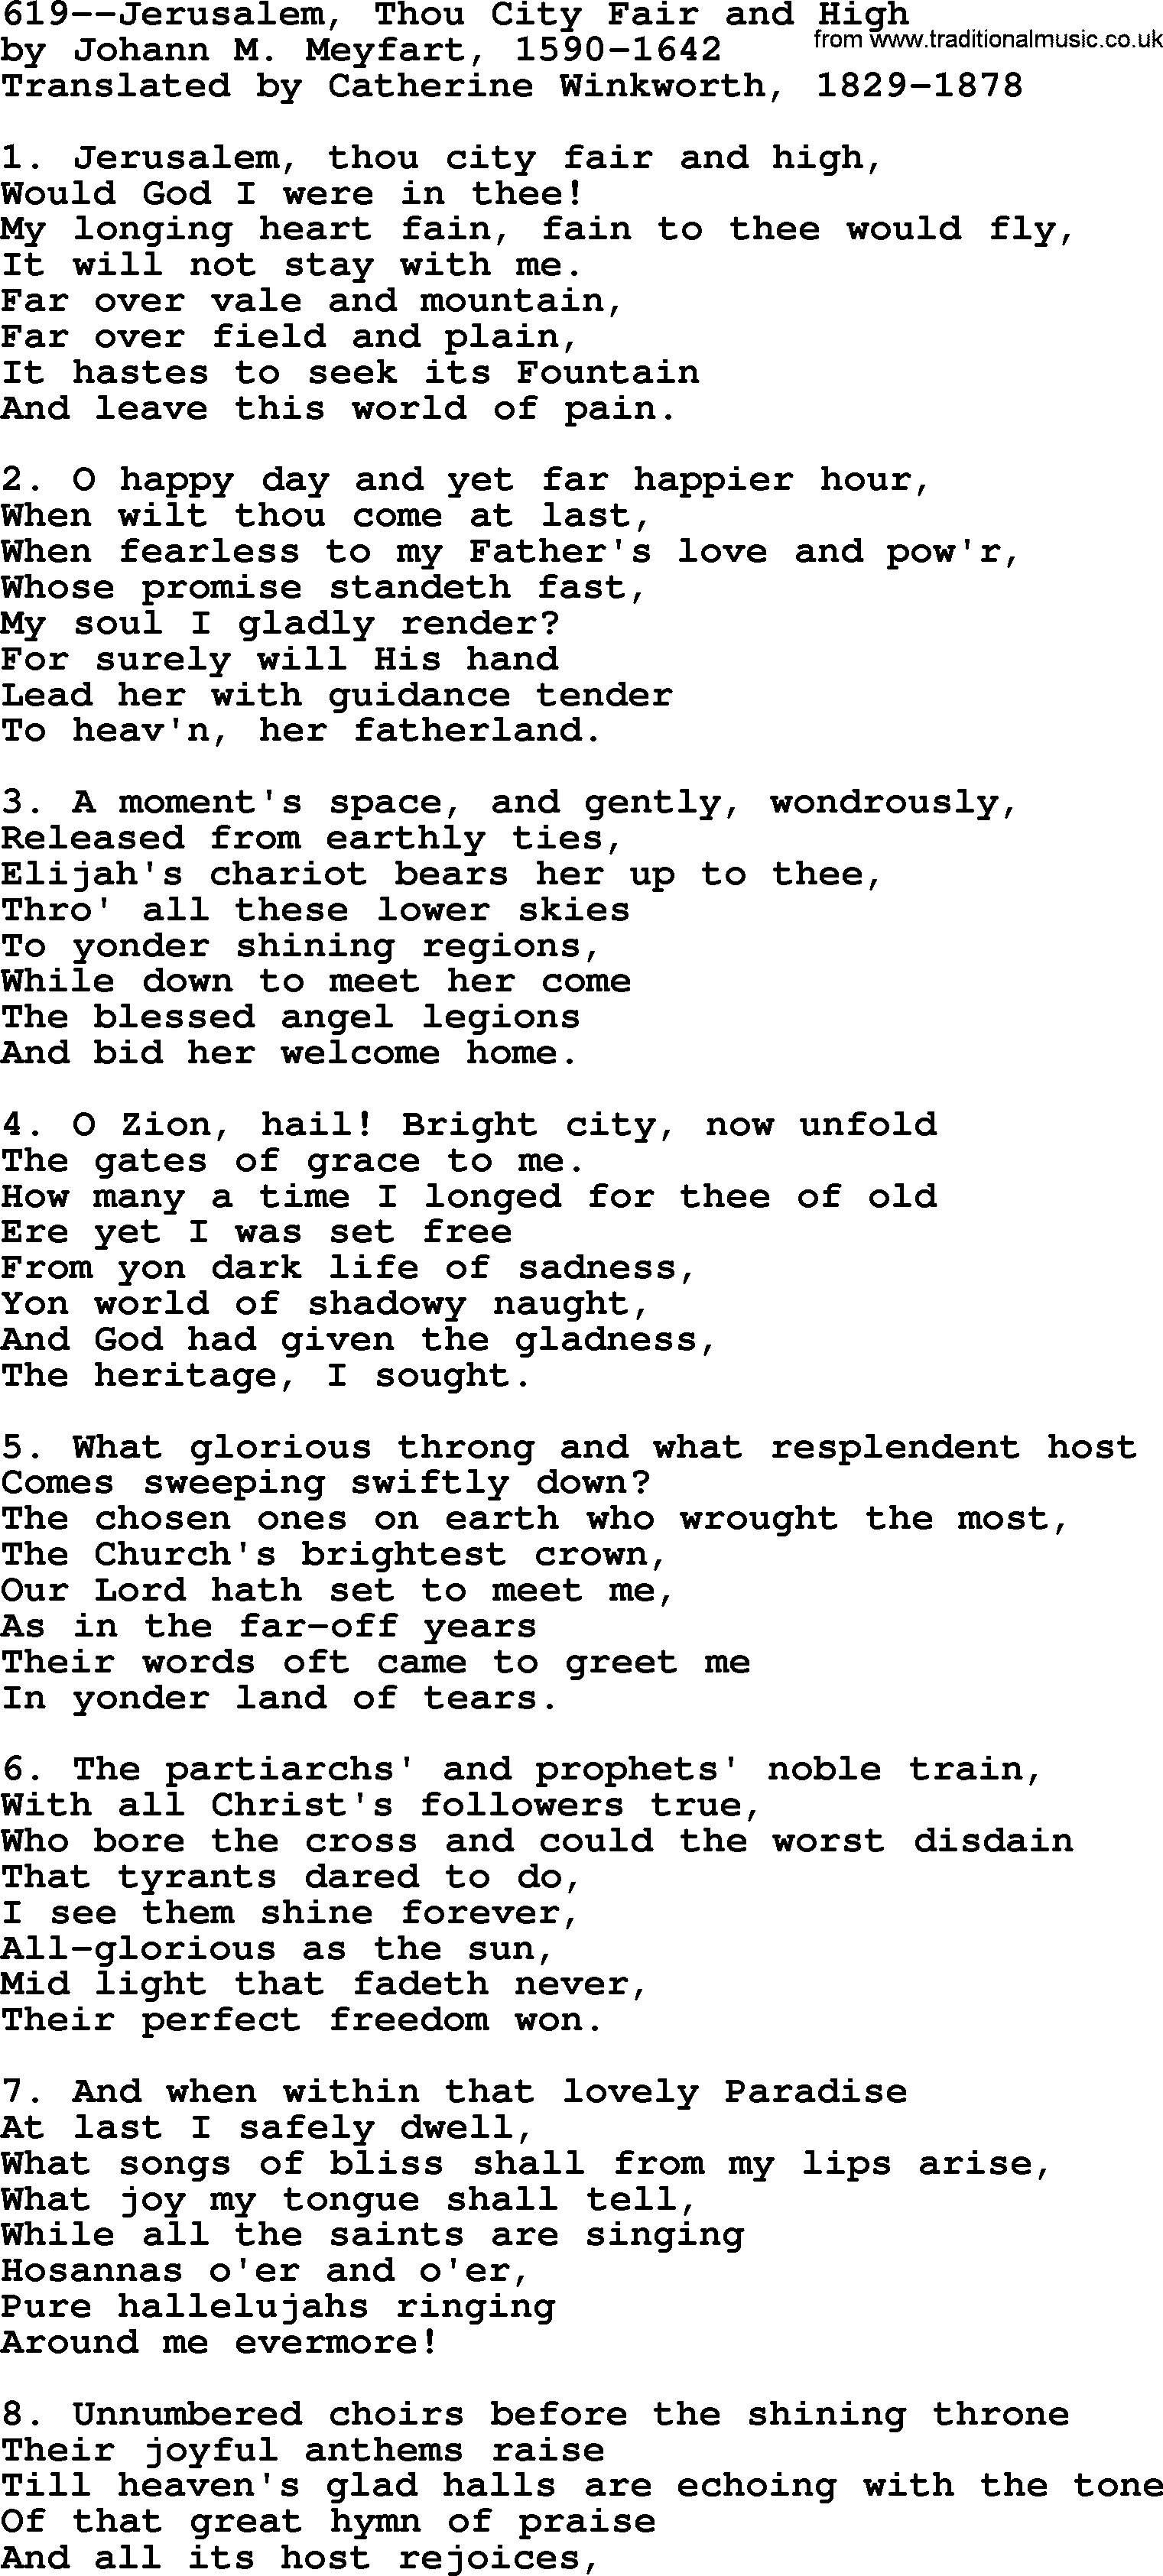 Lutheran Hymn: 619--Jerusalem, Thou City Fair and High.txt lyrics with PDF